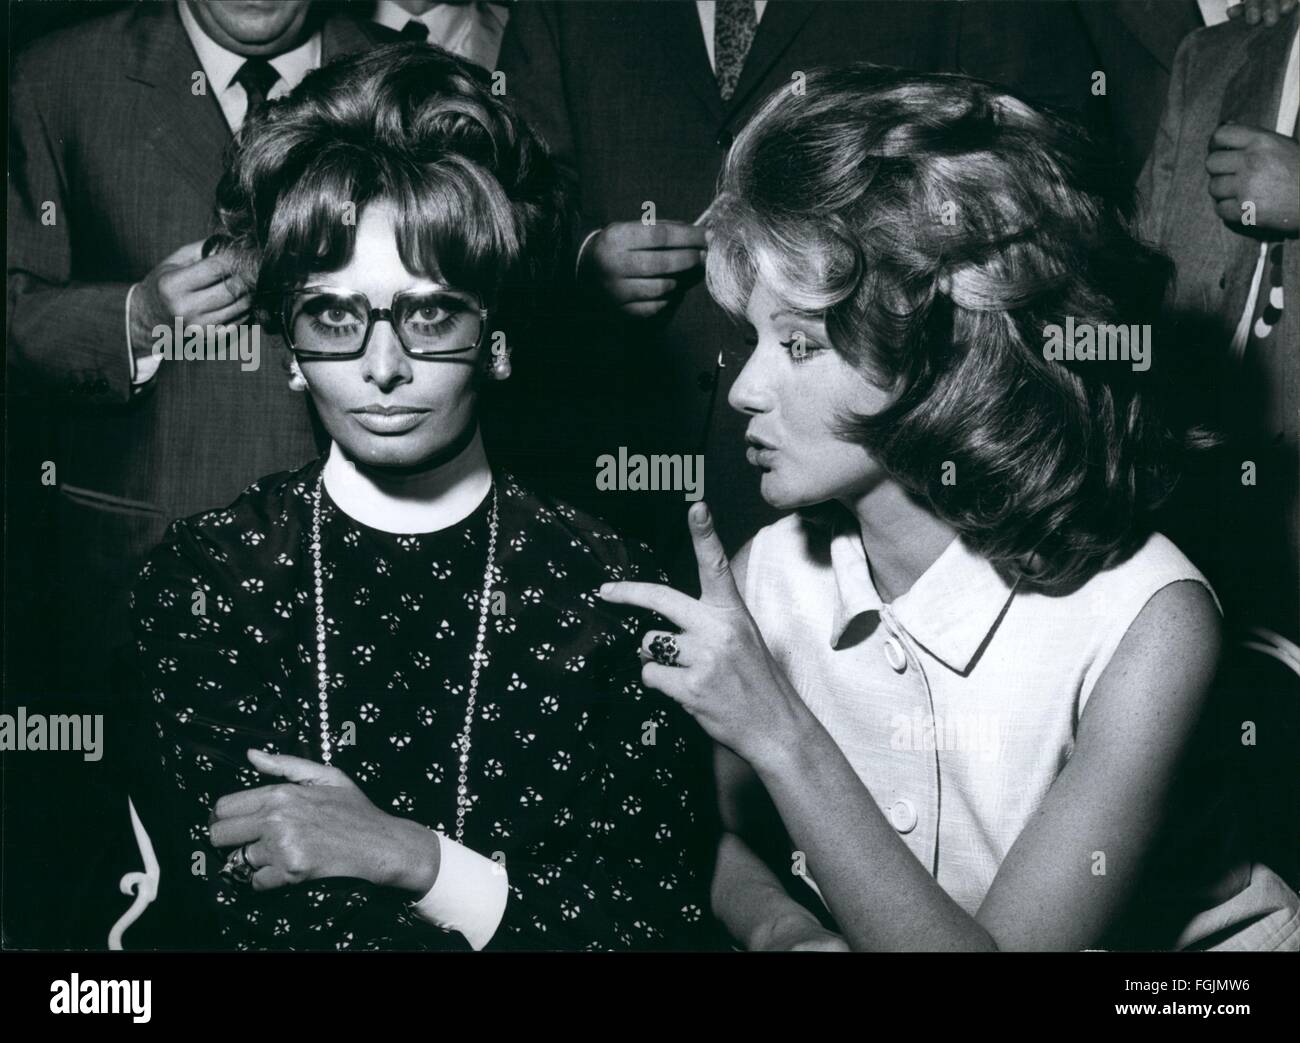 1969 - Sophia Loren, left and Sylva Koscina, talking during the party. © Keystone Pictures USA/ZUMAPRESS.com/Alamy Live News Stock Photo